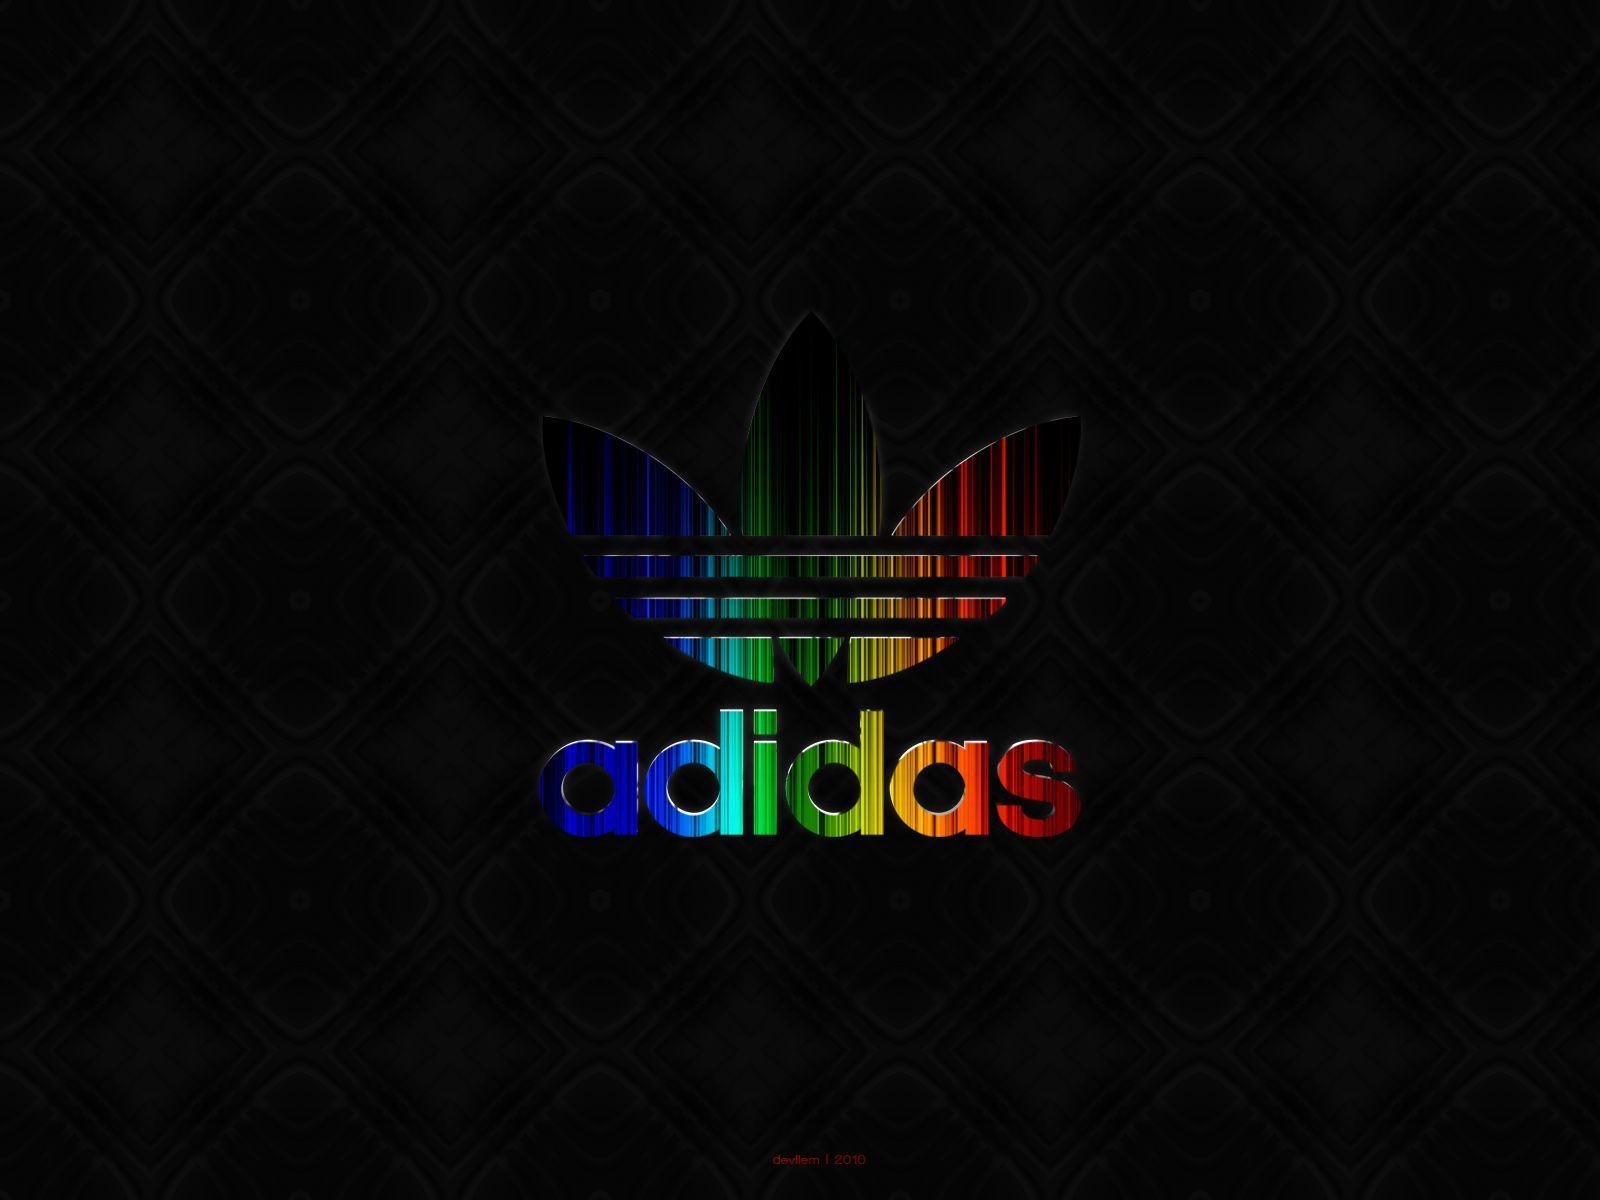 rainbow adidas logo